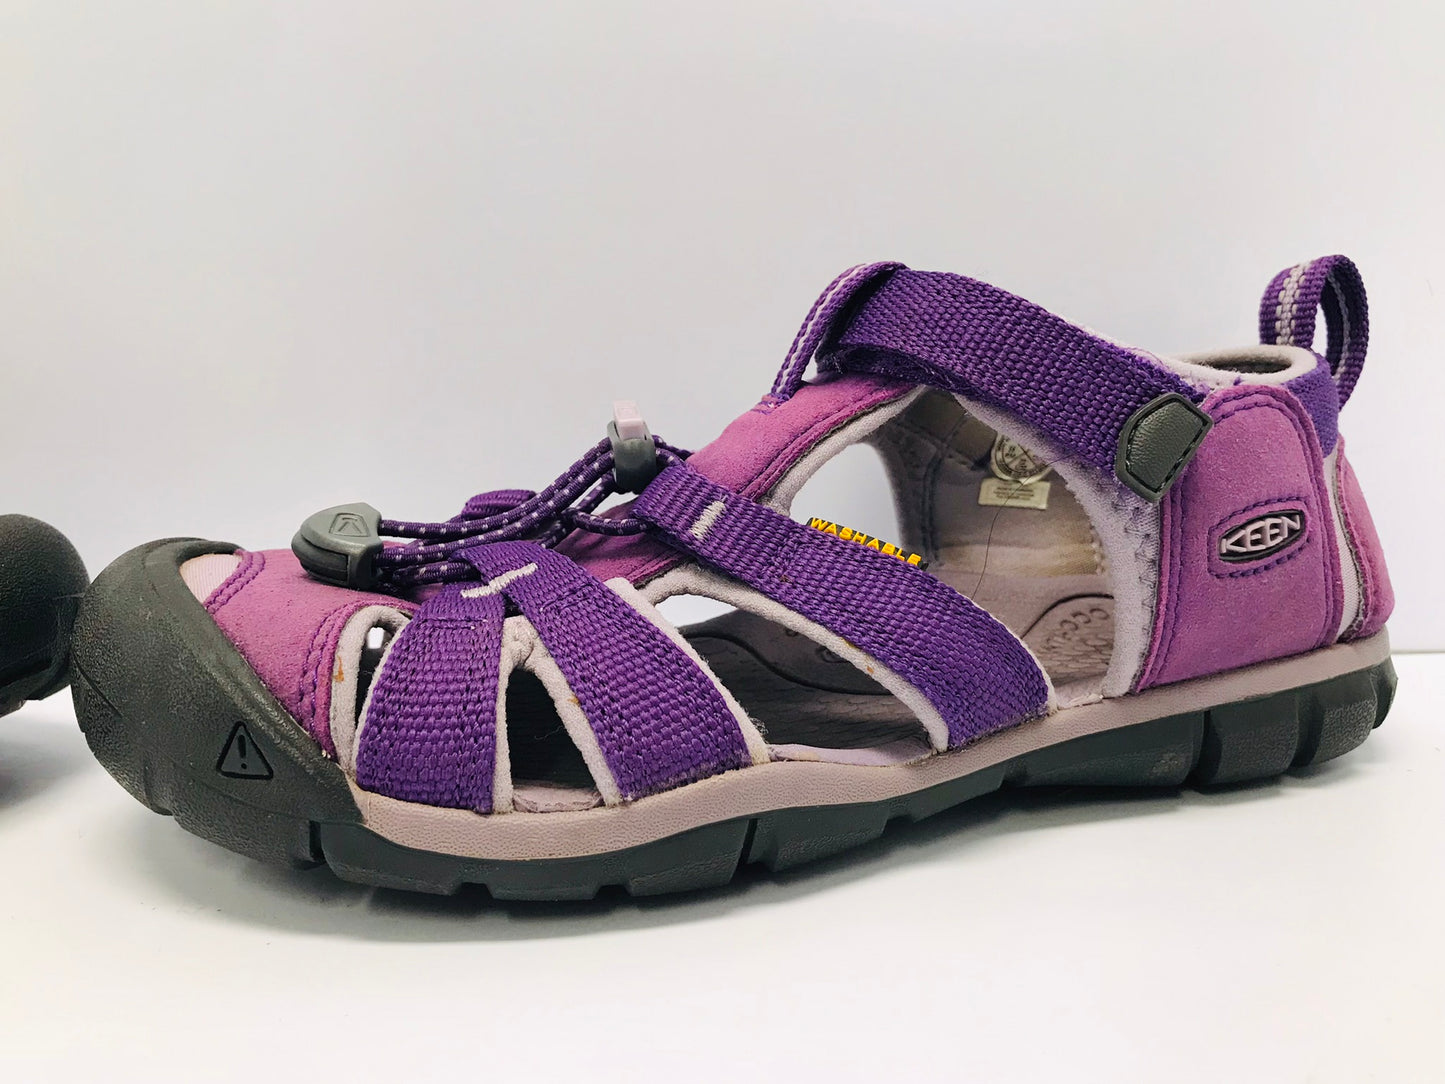 Sandles Summer Child Size 3 Keen Purple Leather Rubber Soles